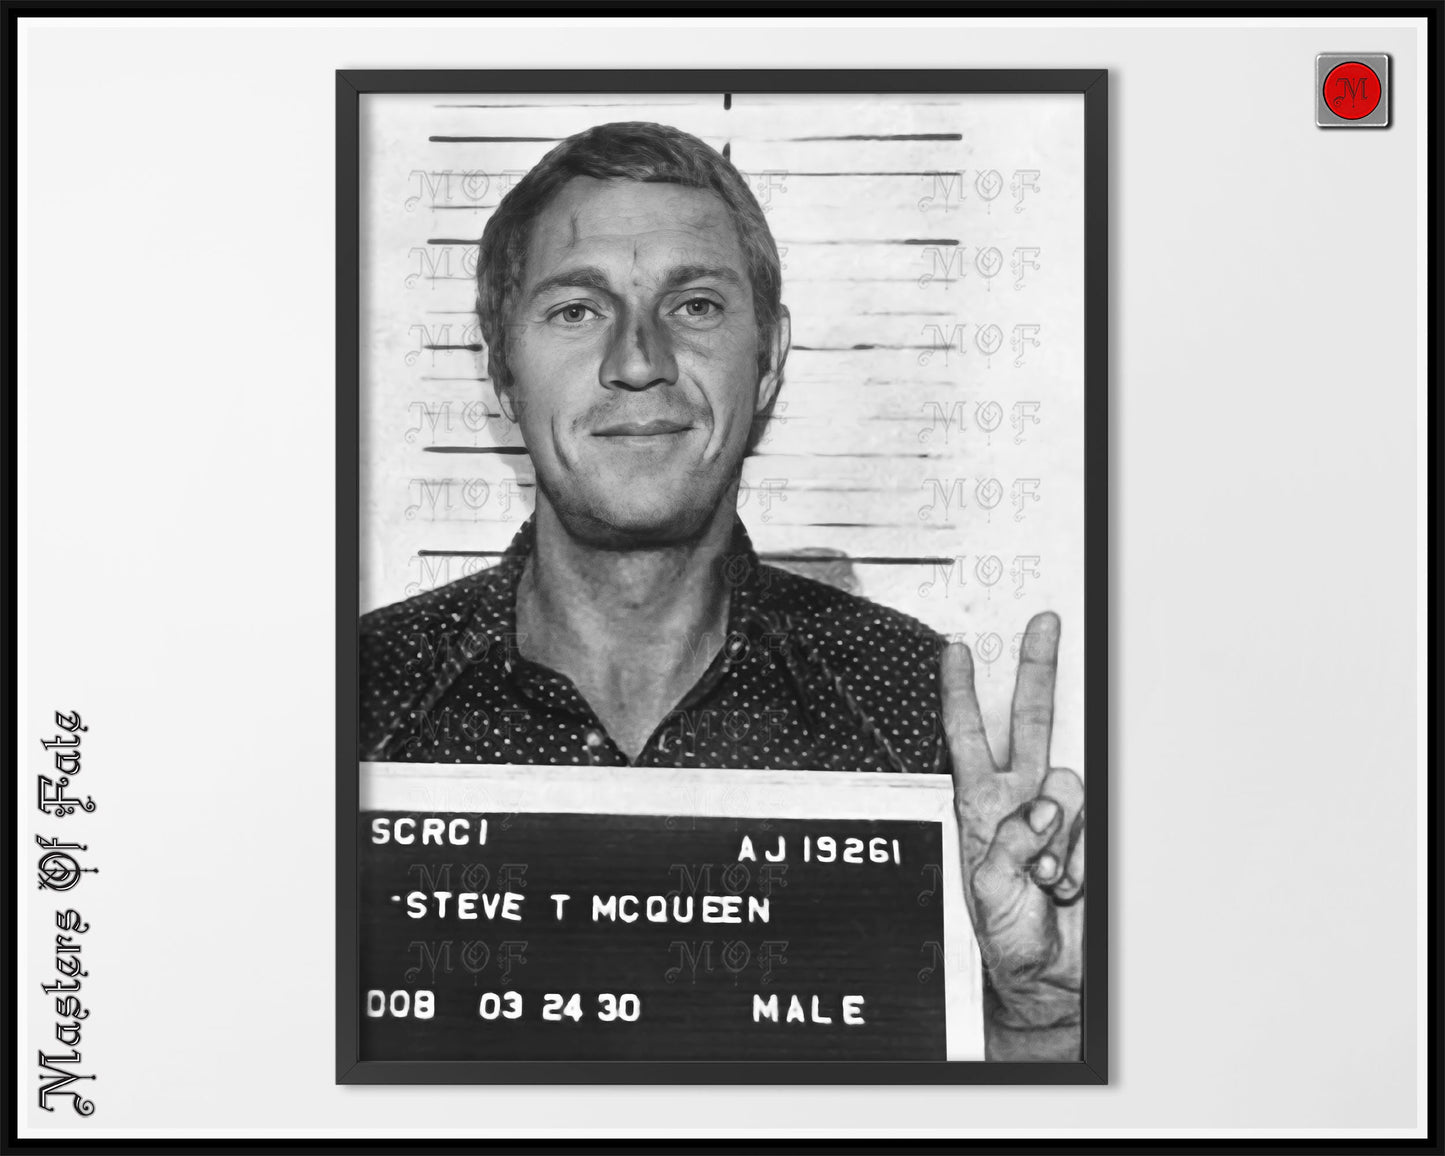 Steve McQueen Mugshot Poster Celebrity Photo REMASTERED #71 MUG